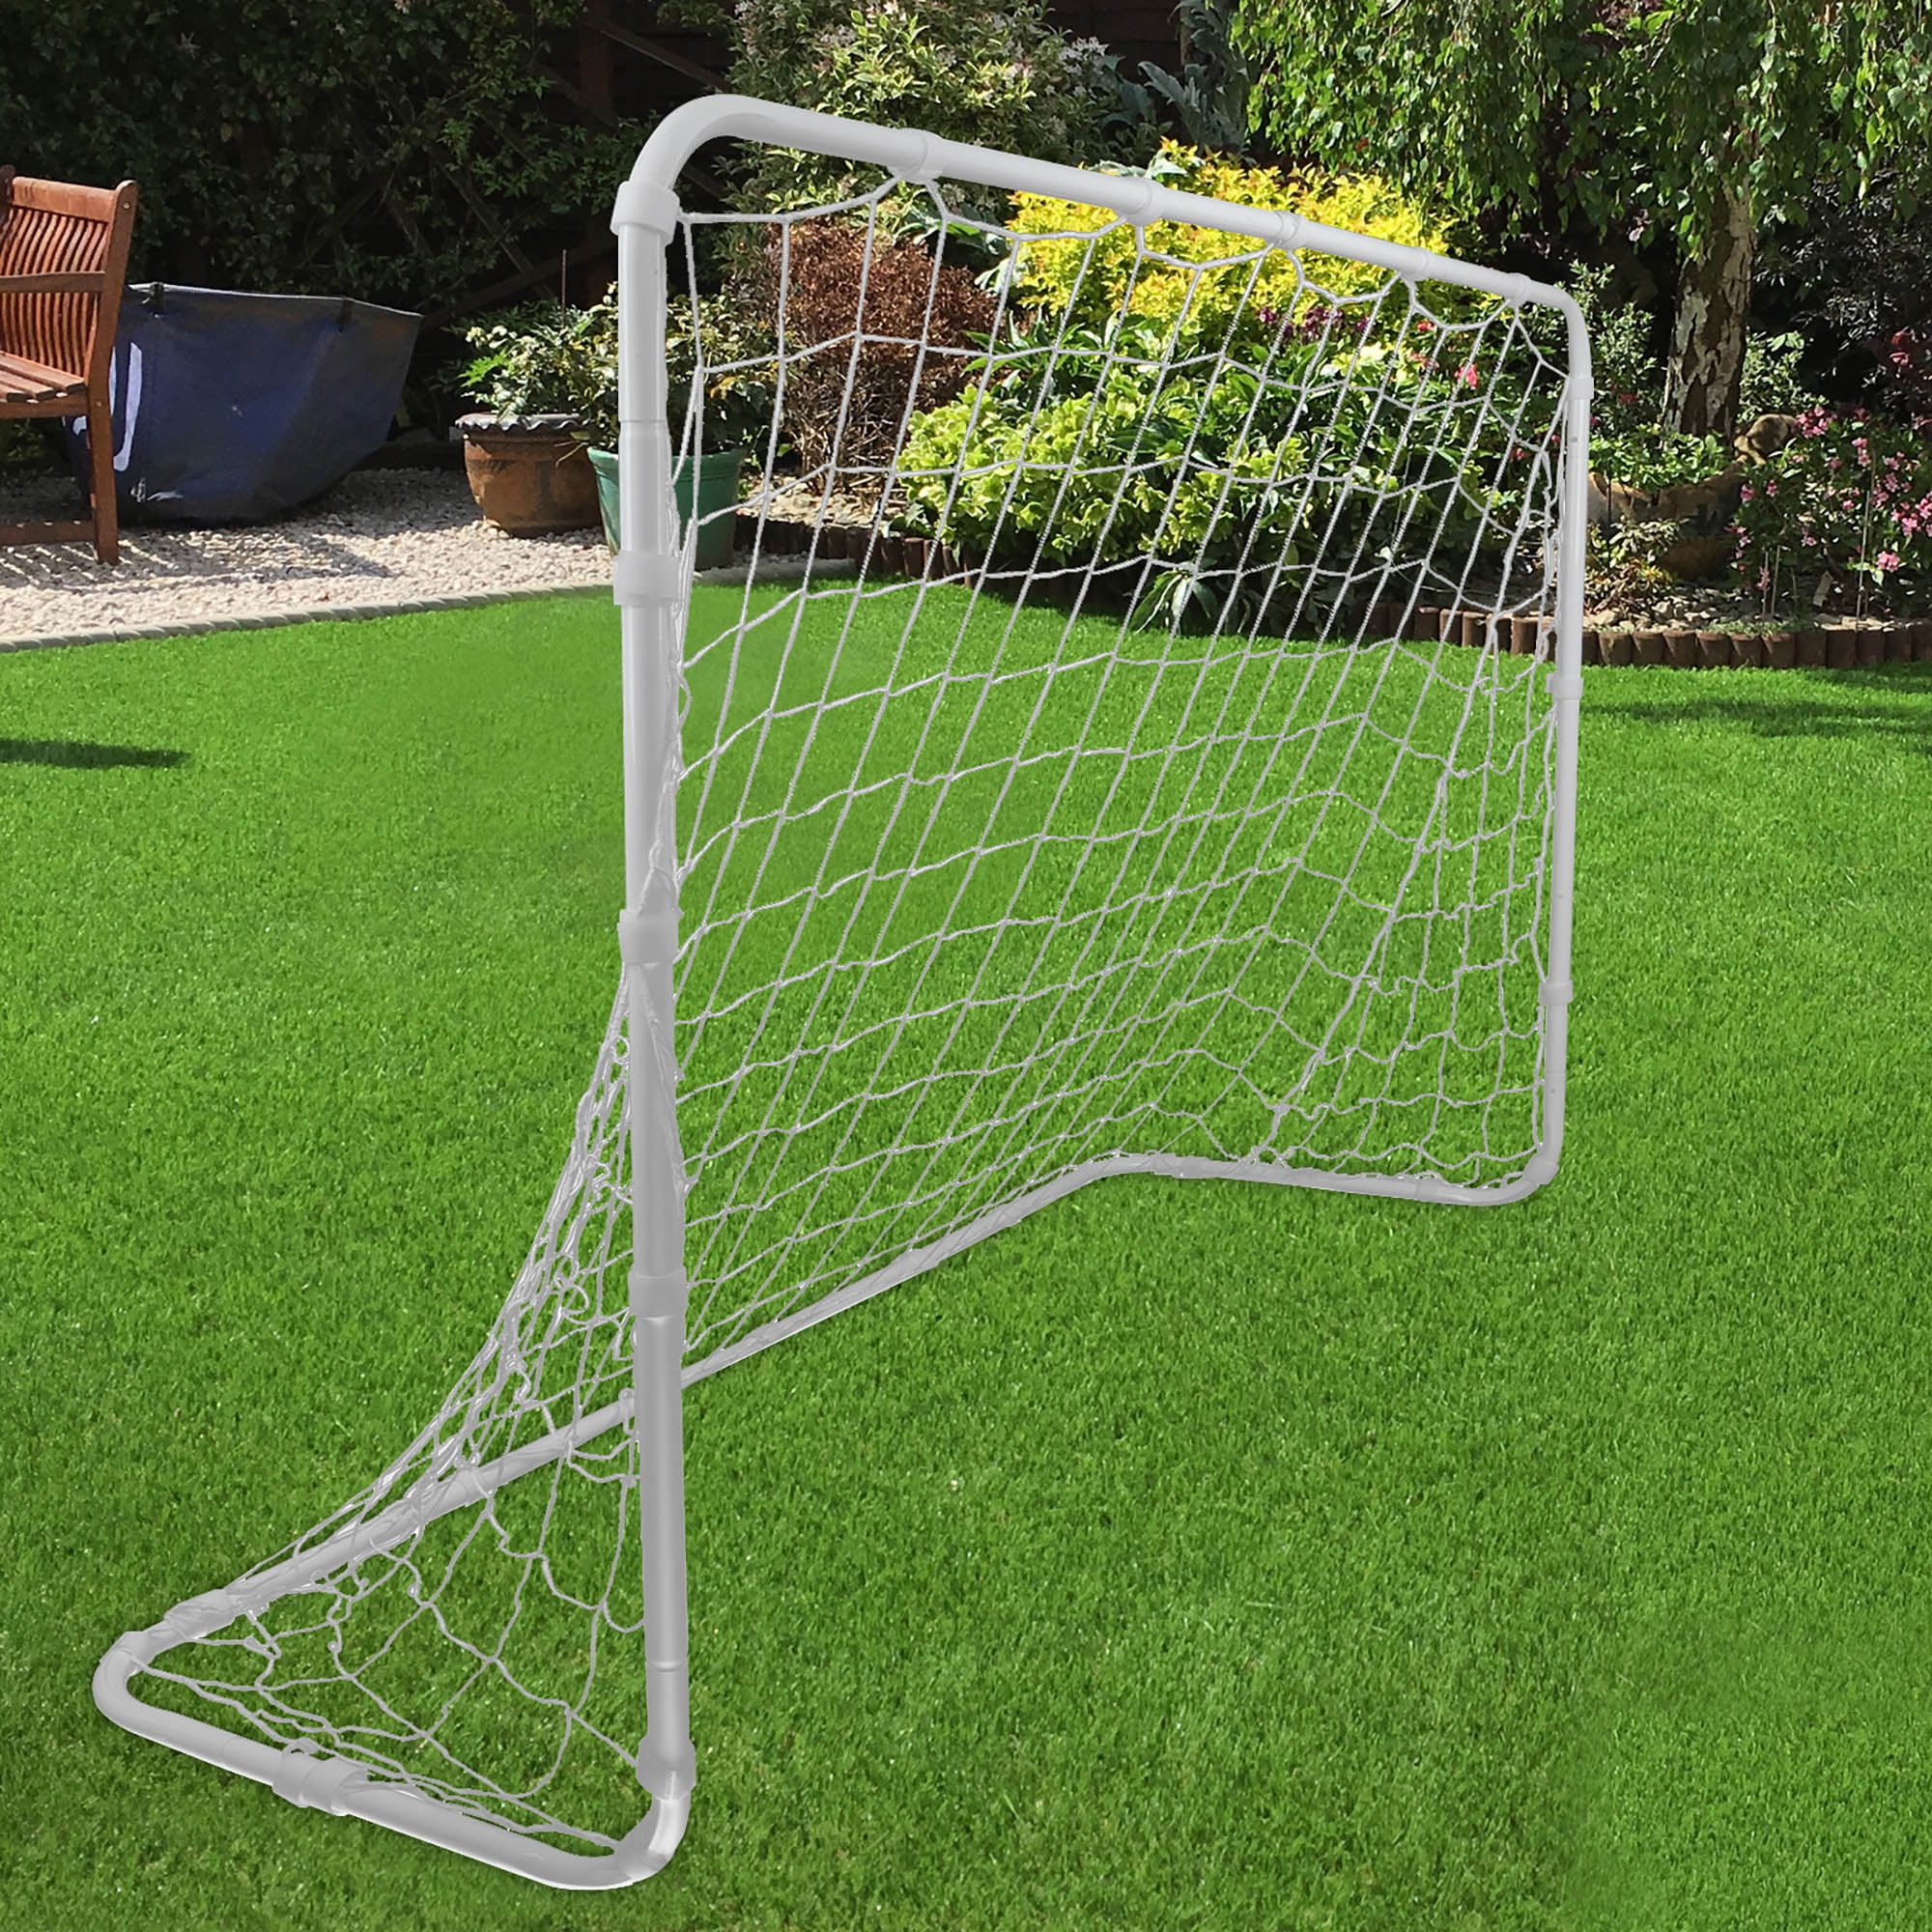 6x 4ft Football Soccer Goal Post Net For Kids Outdoor Football Match Training G* 